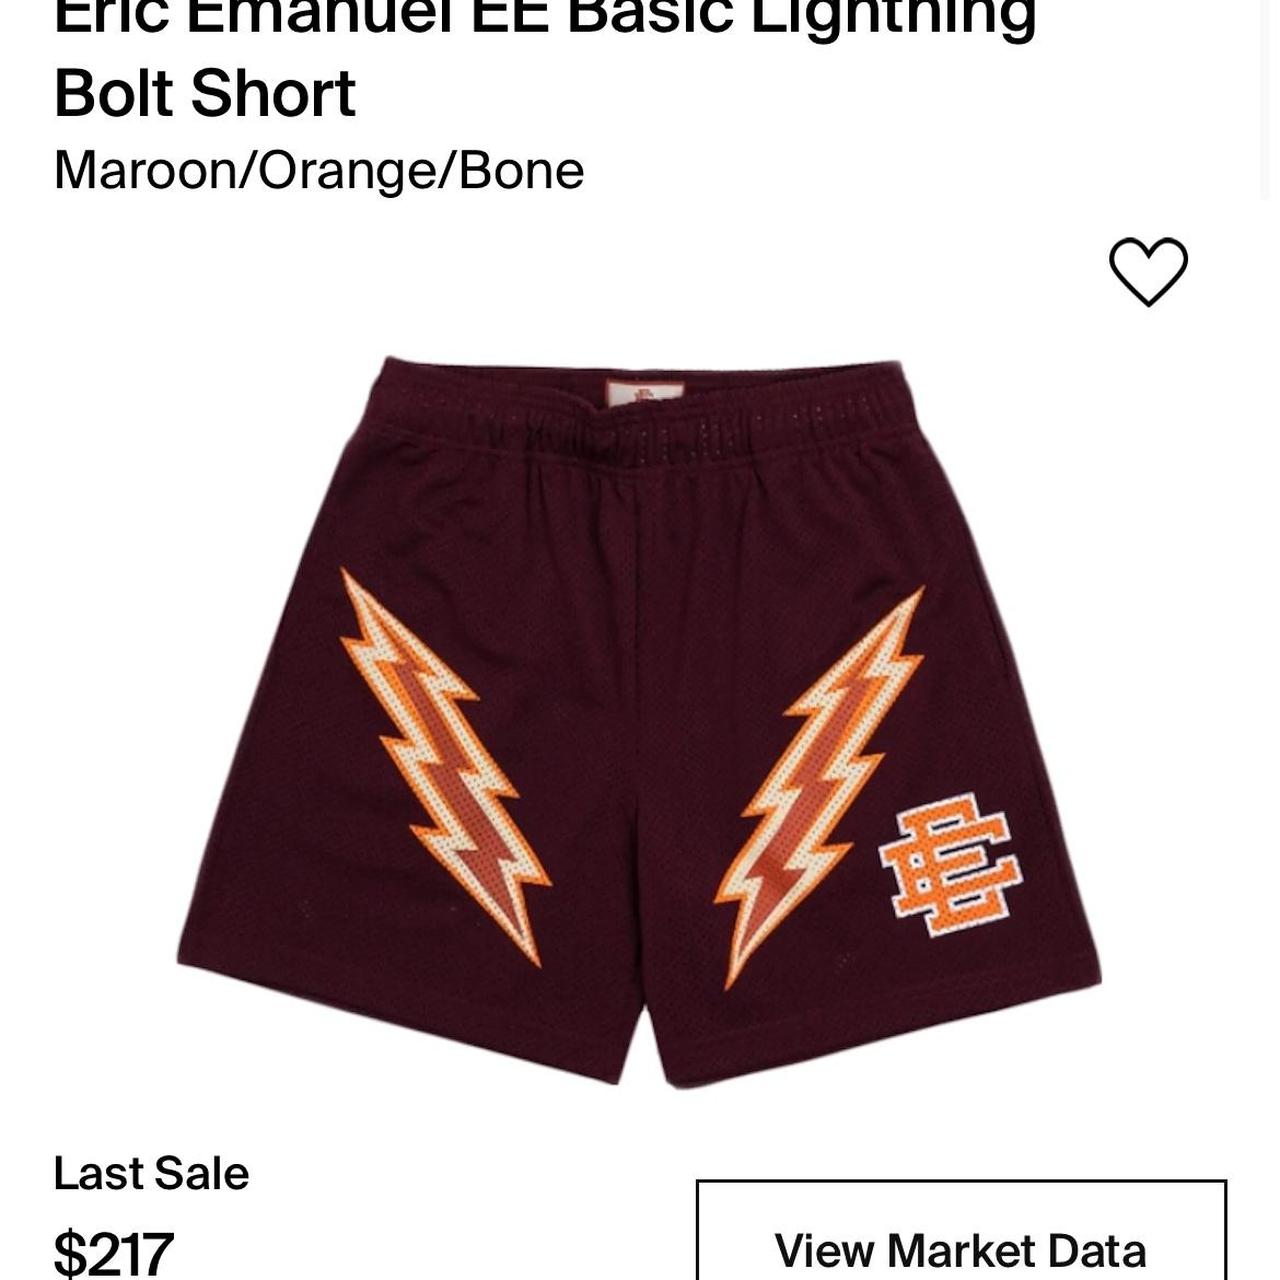 Eric Emanuel EE Basic Lightning Bolt Shorts S